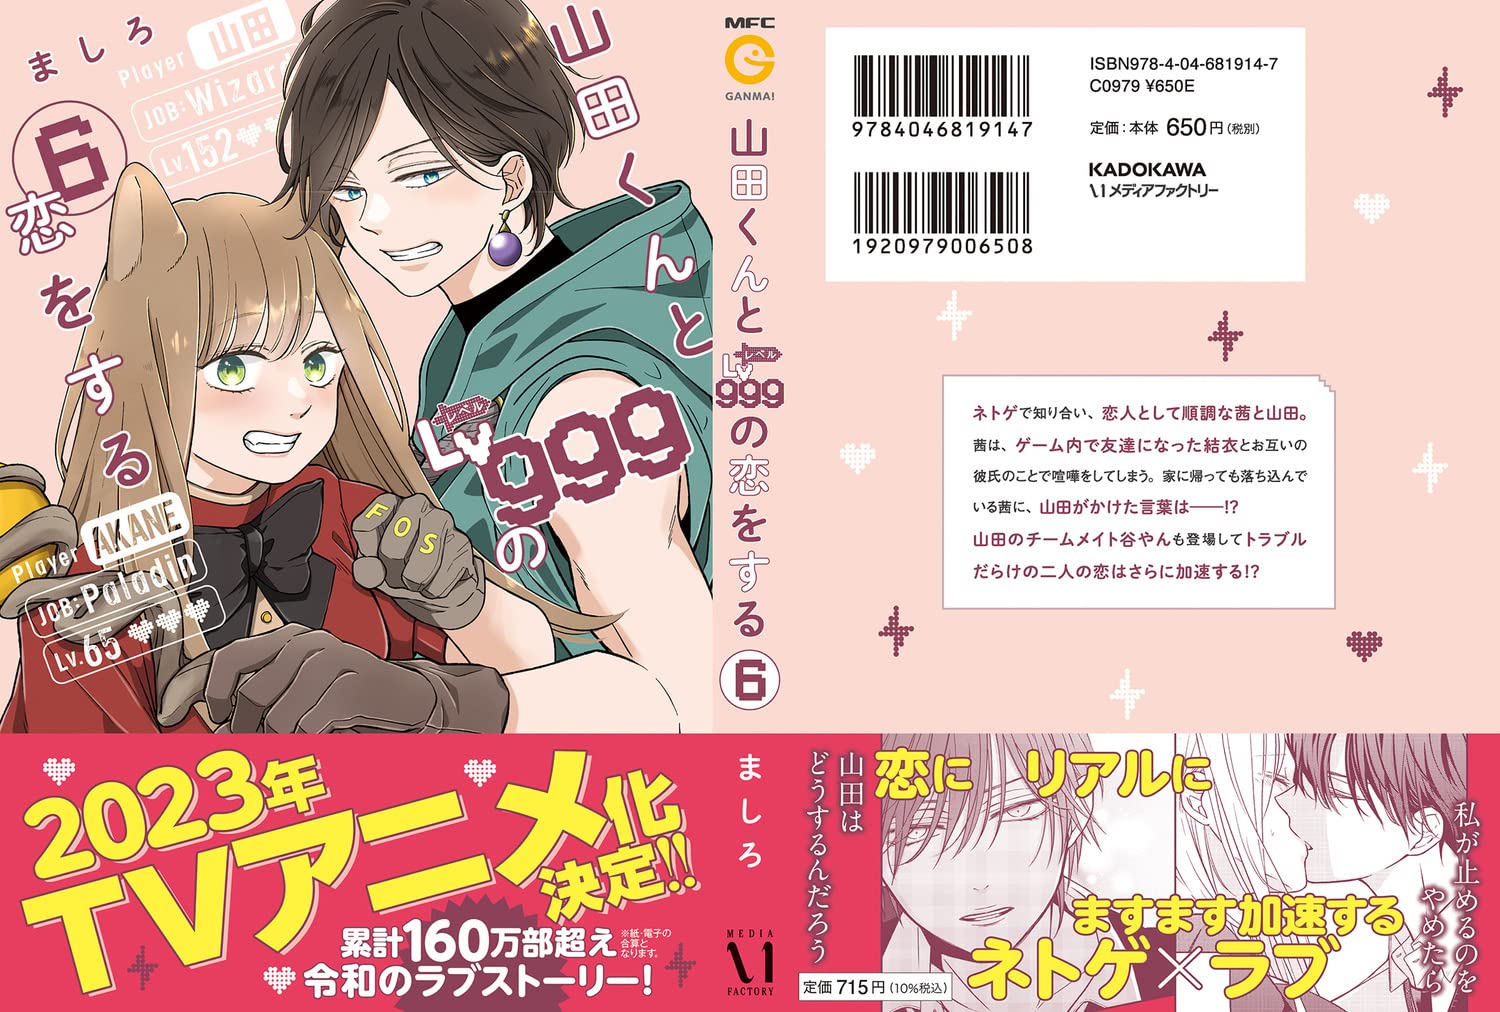 My Lv999 Love for Yamada-kun (Yamada-kun to Lv999 no Koi wo Suru) 5 –  Japanese Book Store